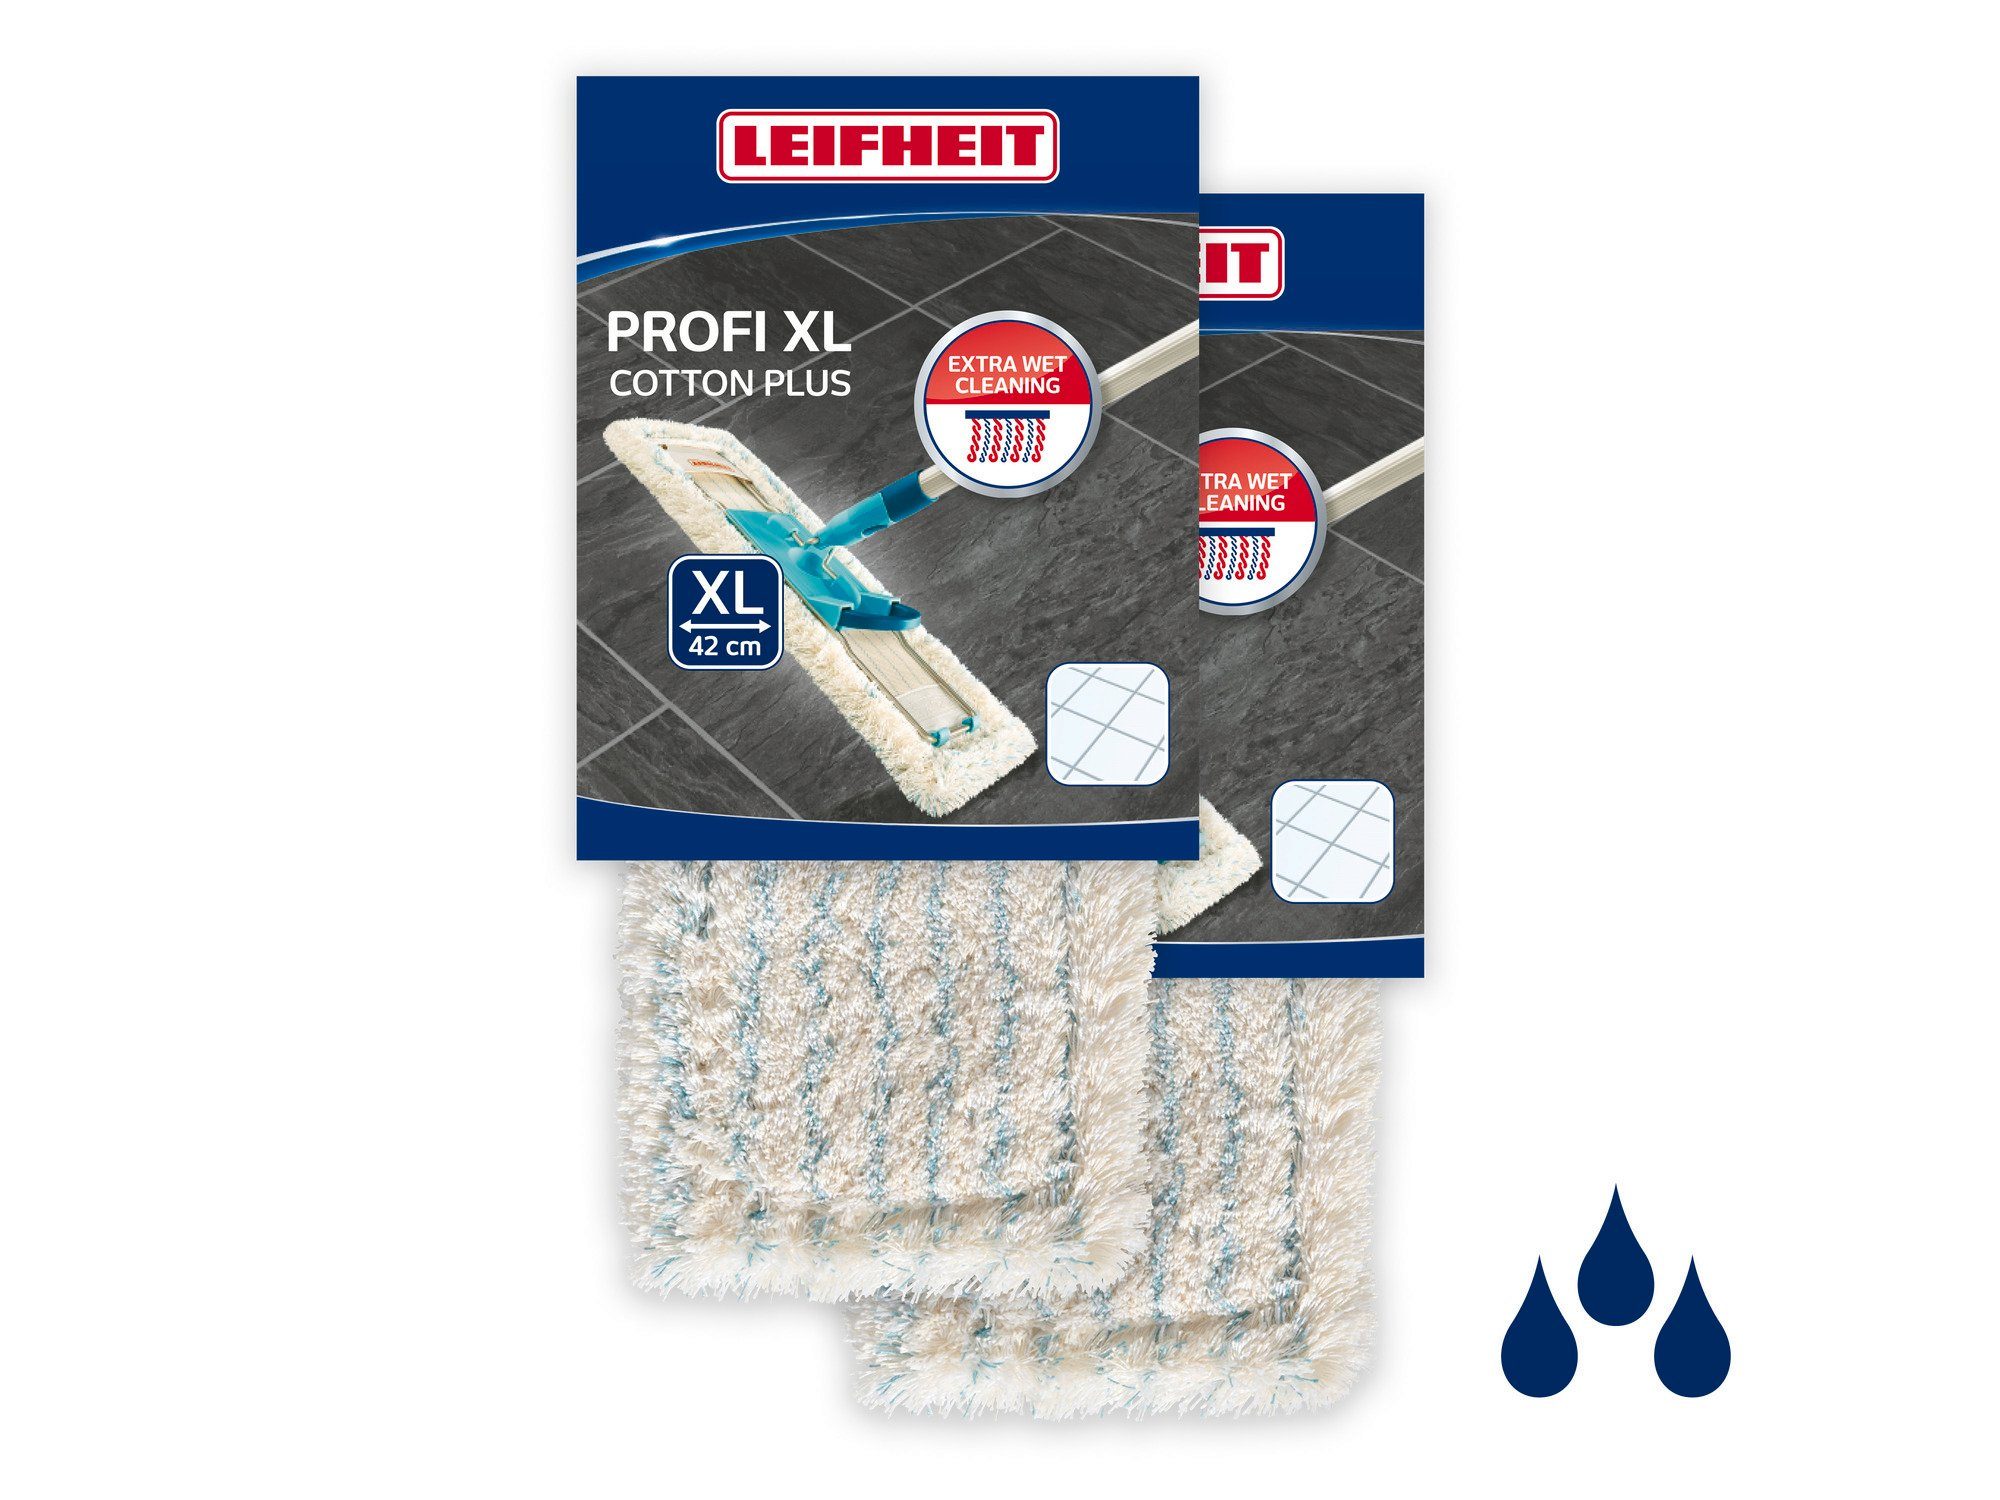 Leifheit Bundle Wischbezug Profi XL cotton plus (2er Set) Wischbezug